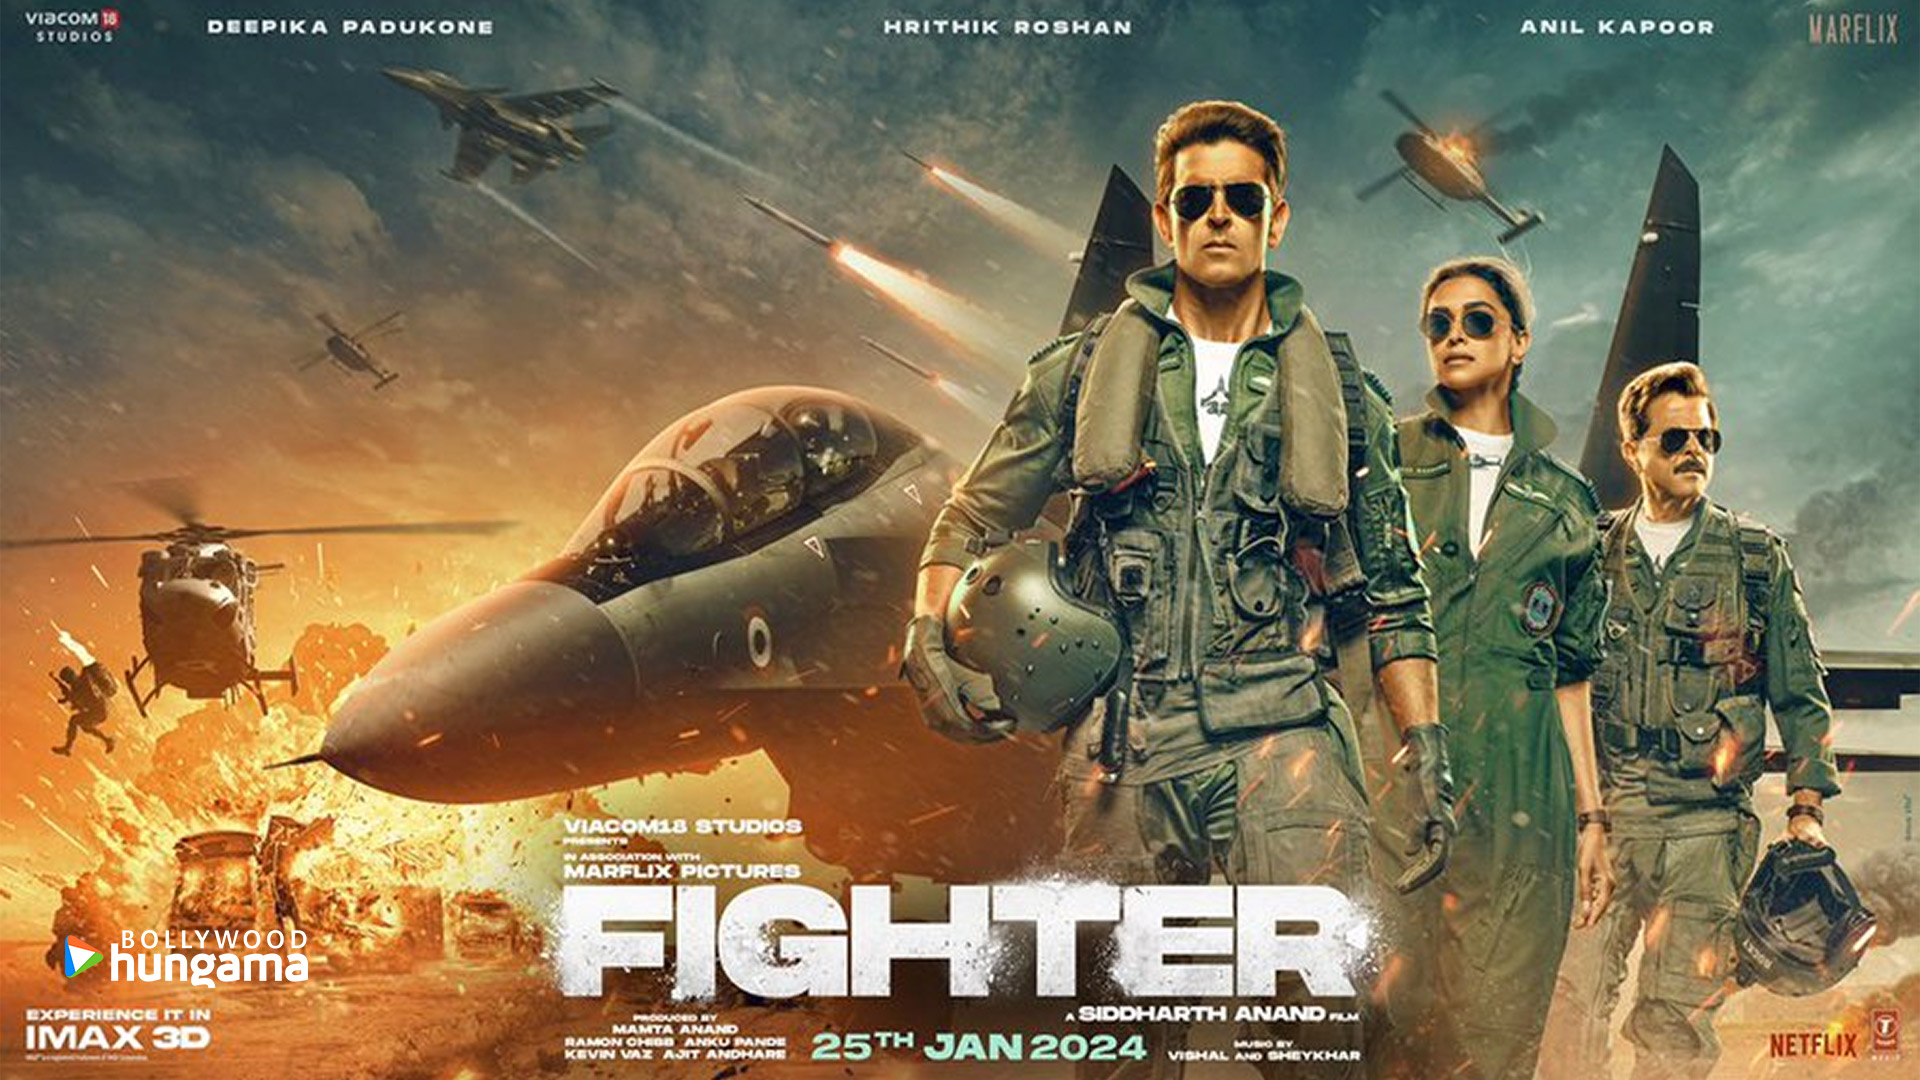 A Powerhouse Pairing, Deepika Padukone & Hrithik Roshan team up for action thriller Fighter